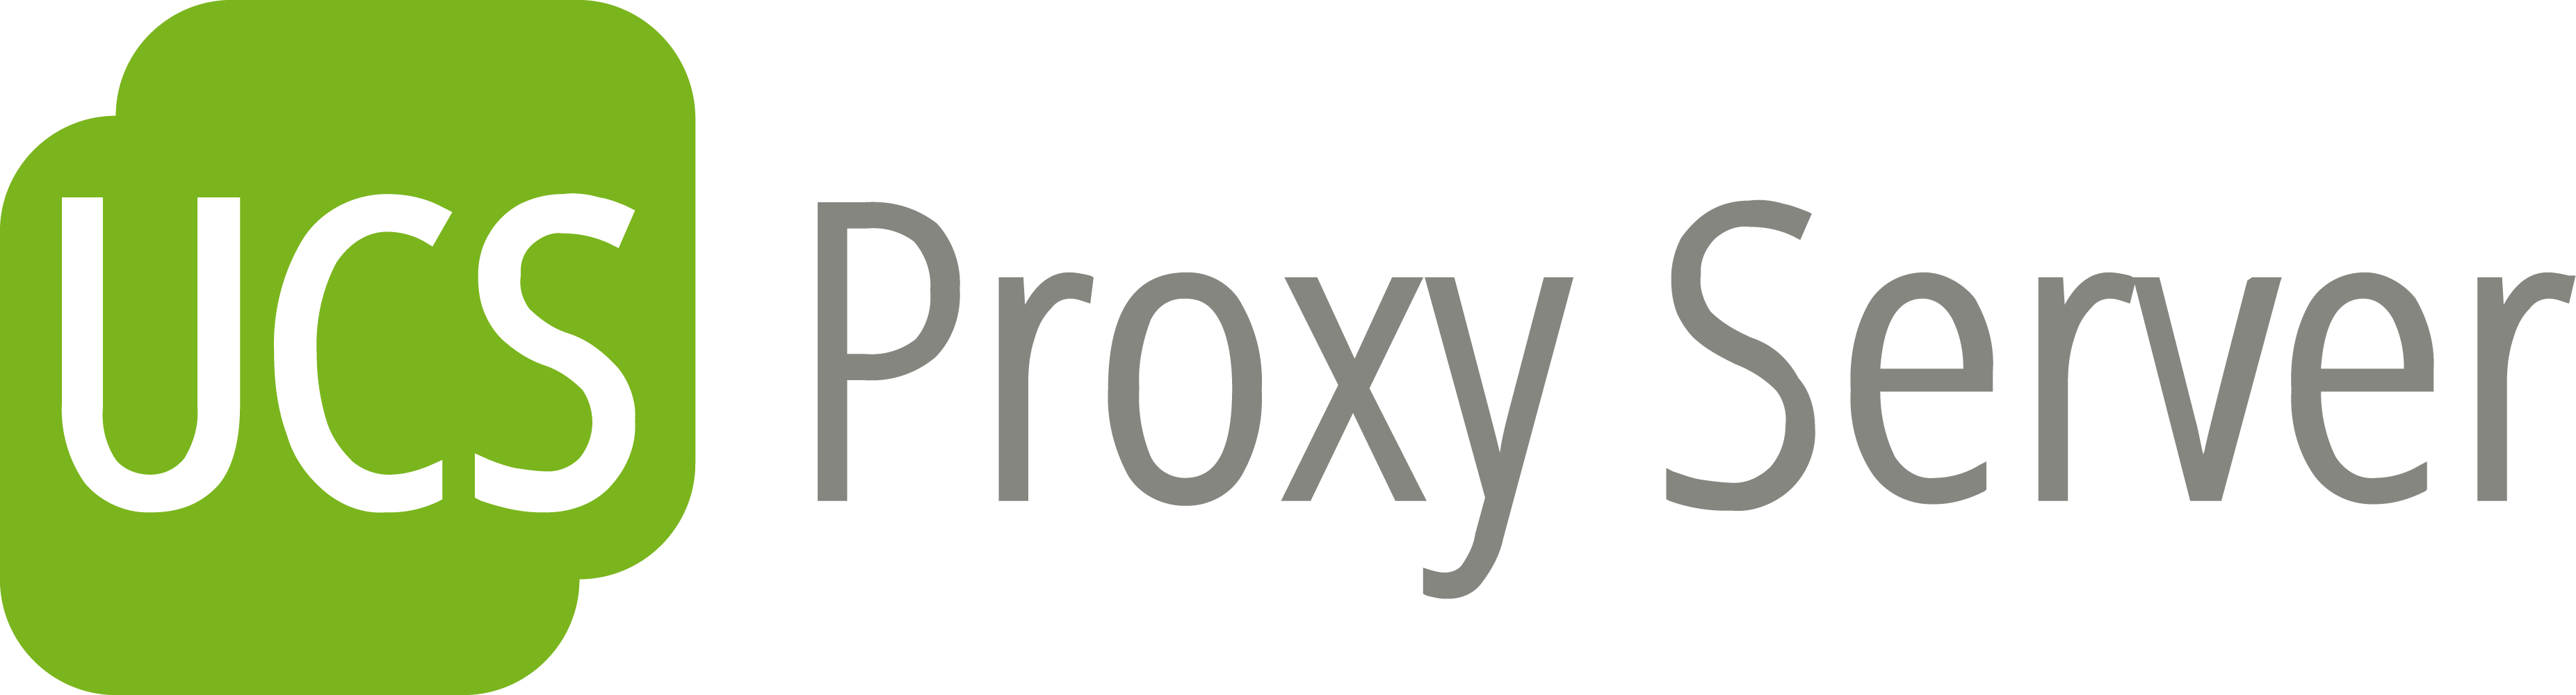 proxy websites list